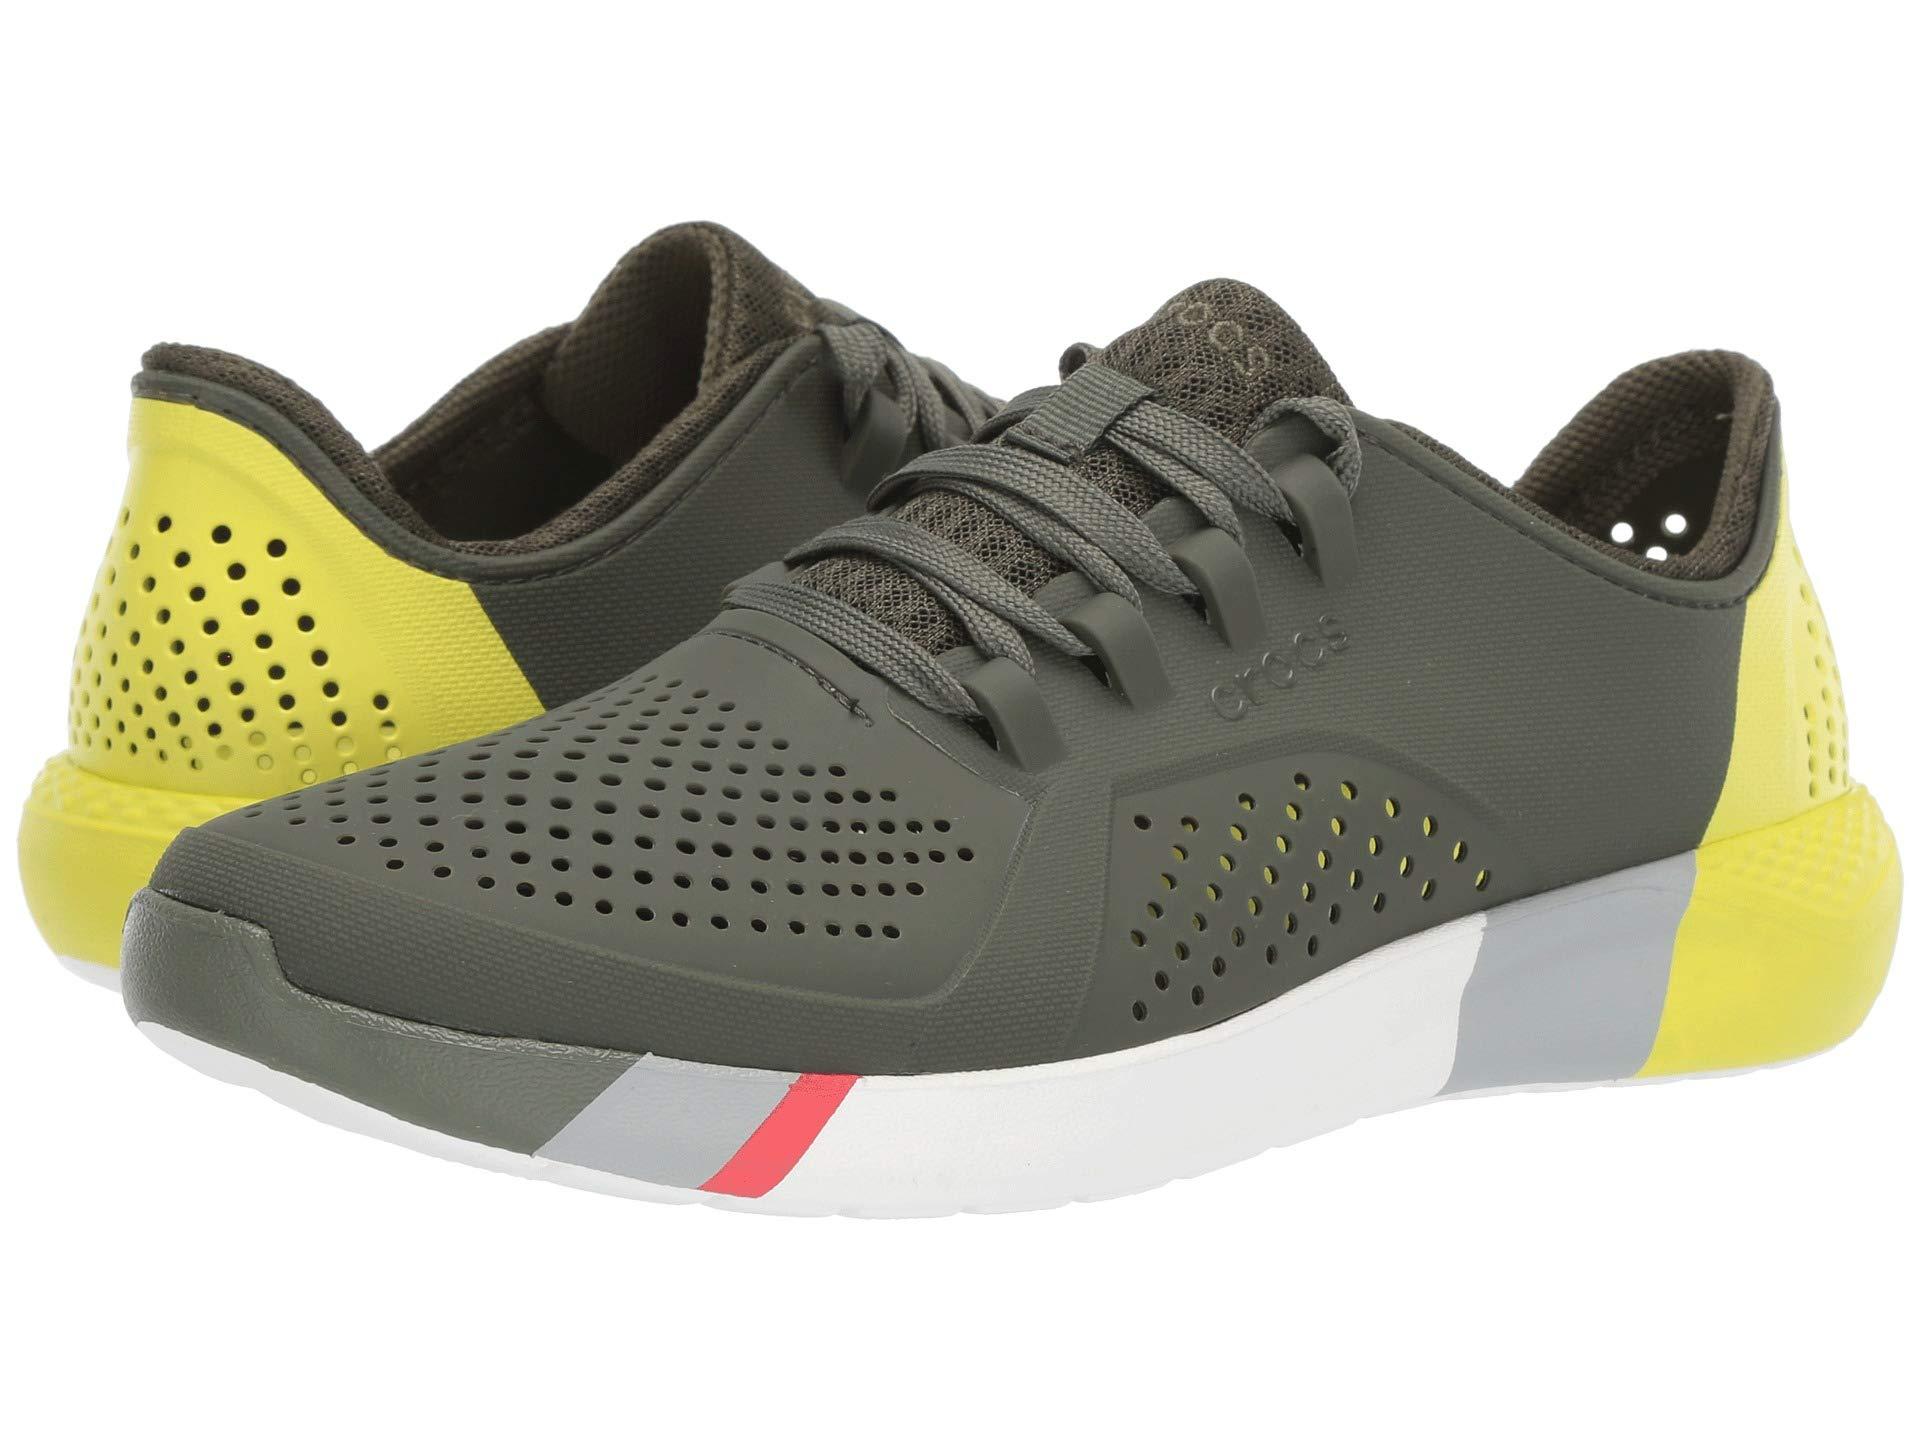 grey croc tennis shoes